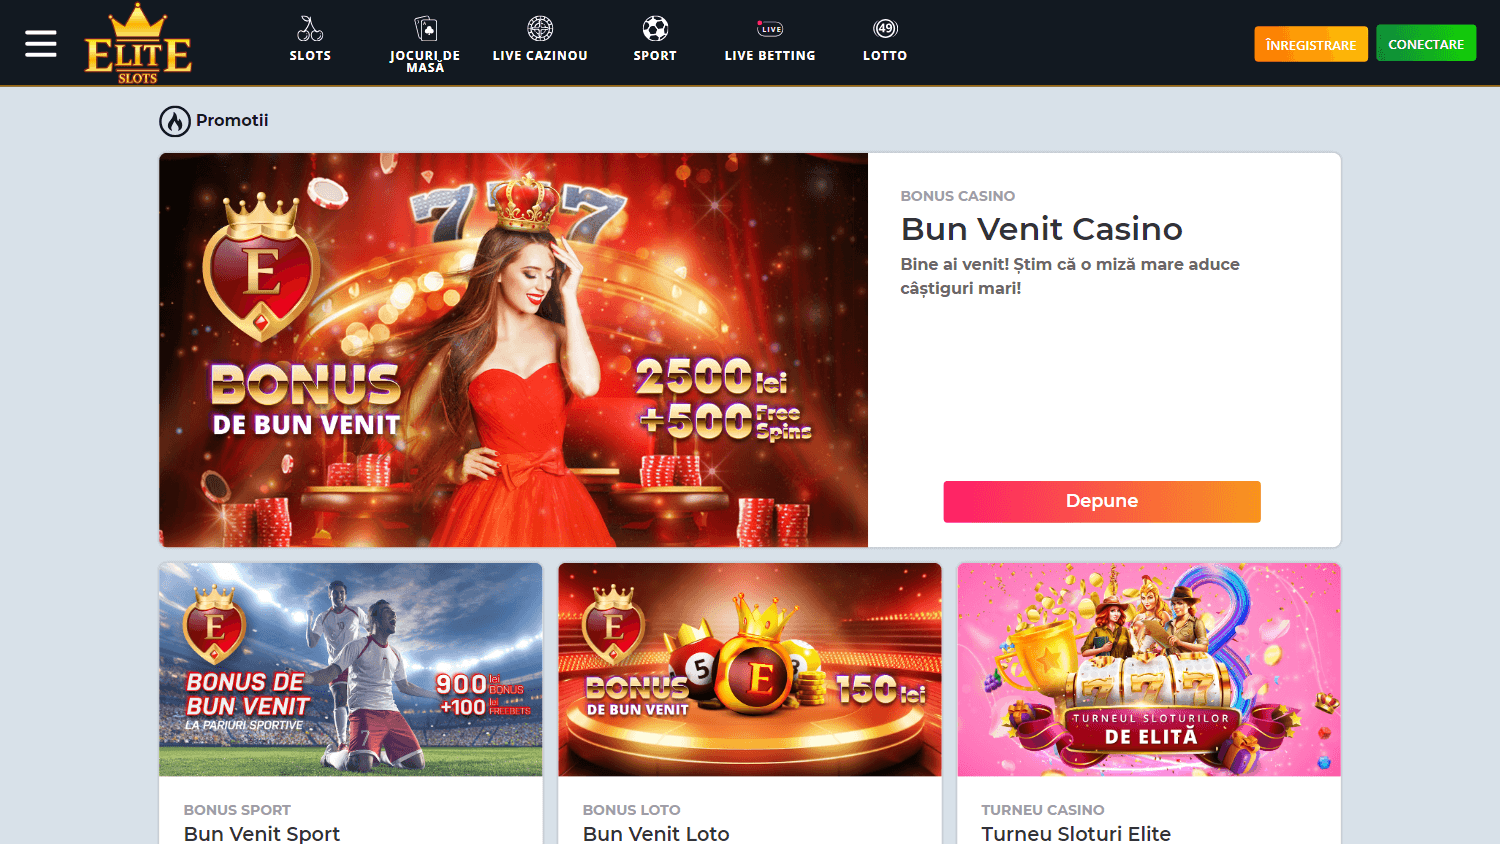 elite_slots_casino_promotions_desktop